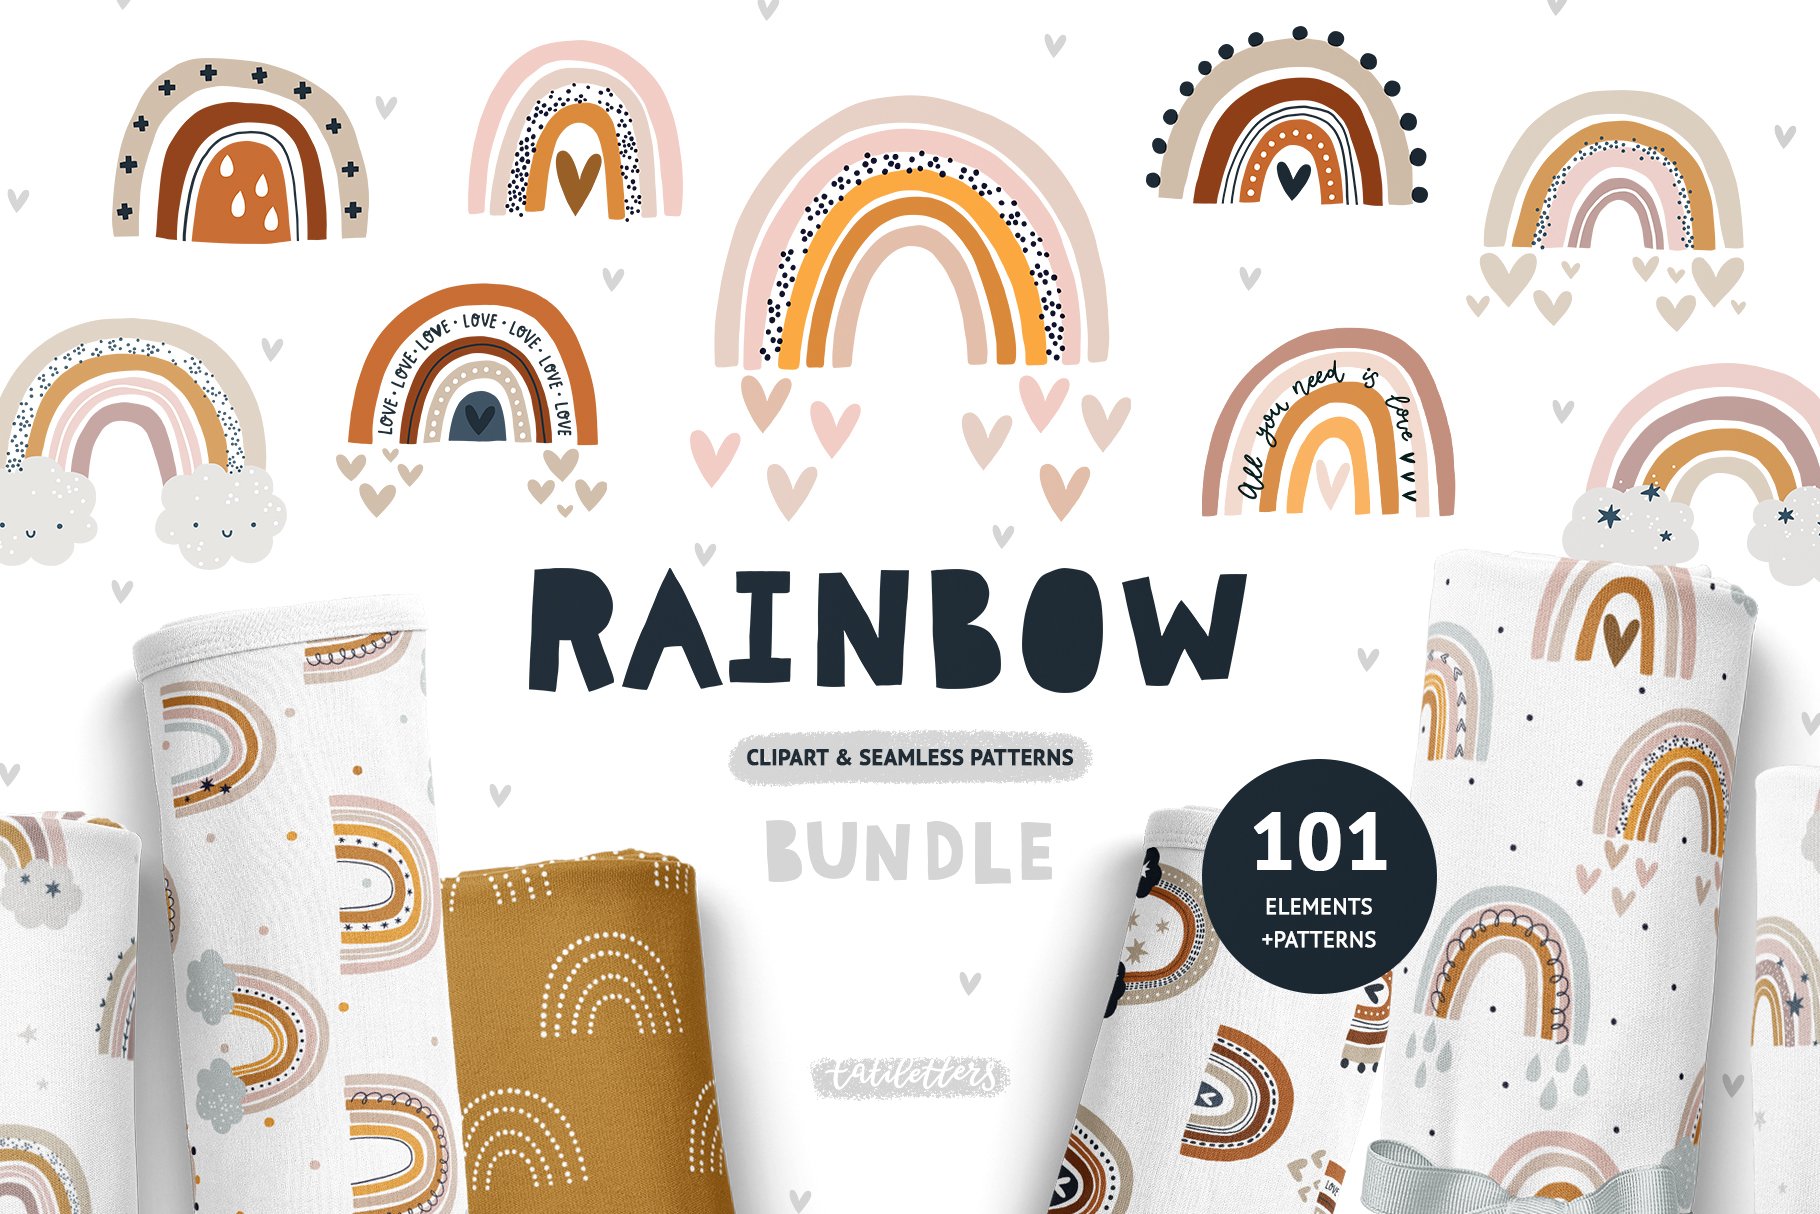 Rainbow Bundle | Clipart & Patterns cover image.